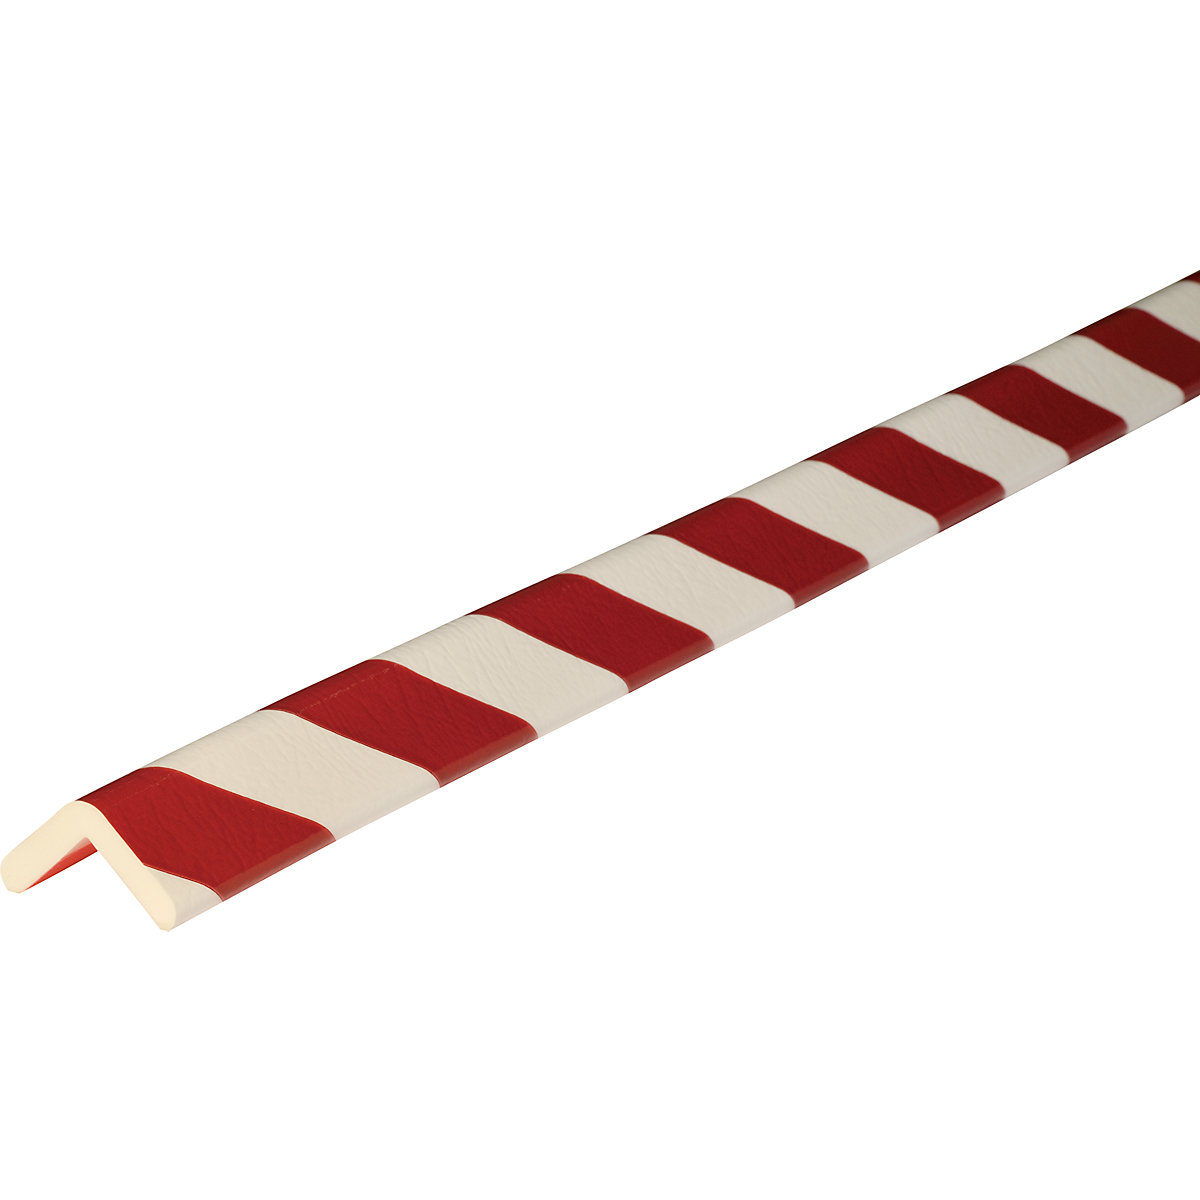 Knuffi®-hoekbescherming – SHG, type H, 1 rol à 50 m, rood/wit-10